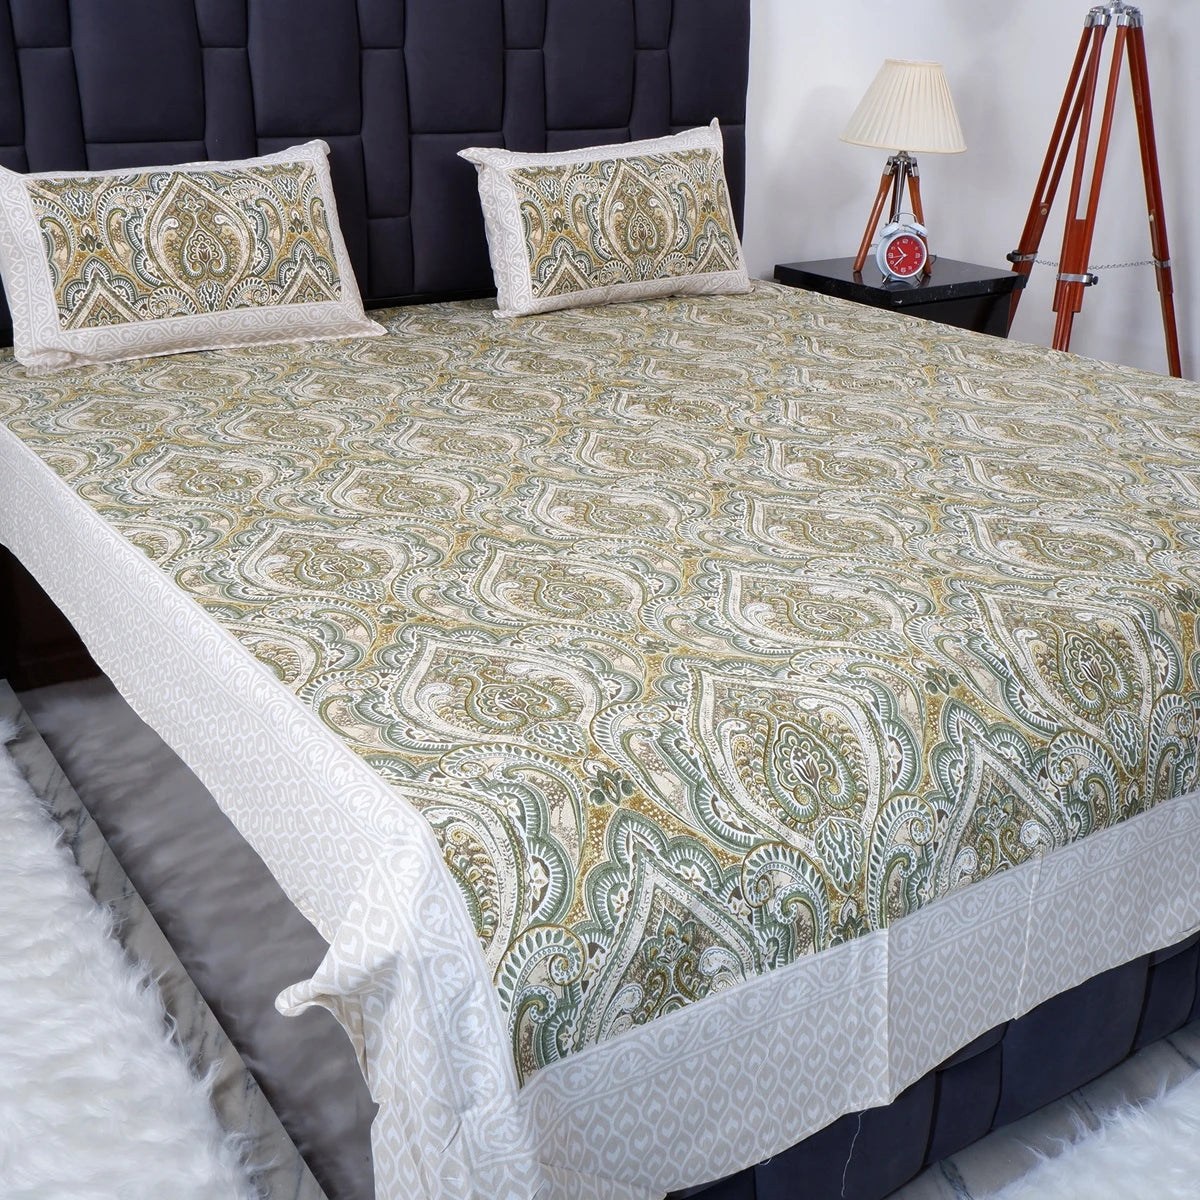 100% Pure Cotton Bed Sheet | Exquisite Jaipuri Cotton Bedding